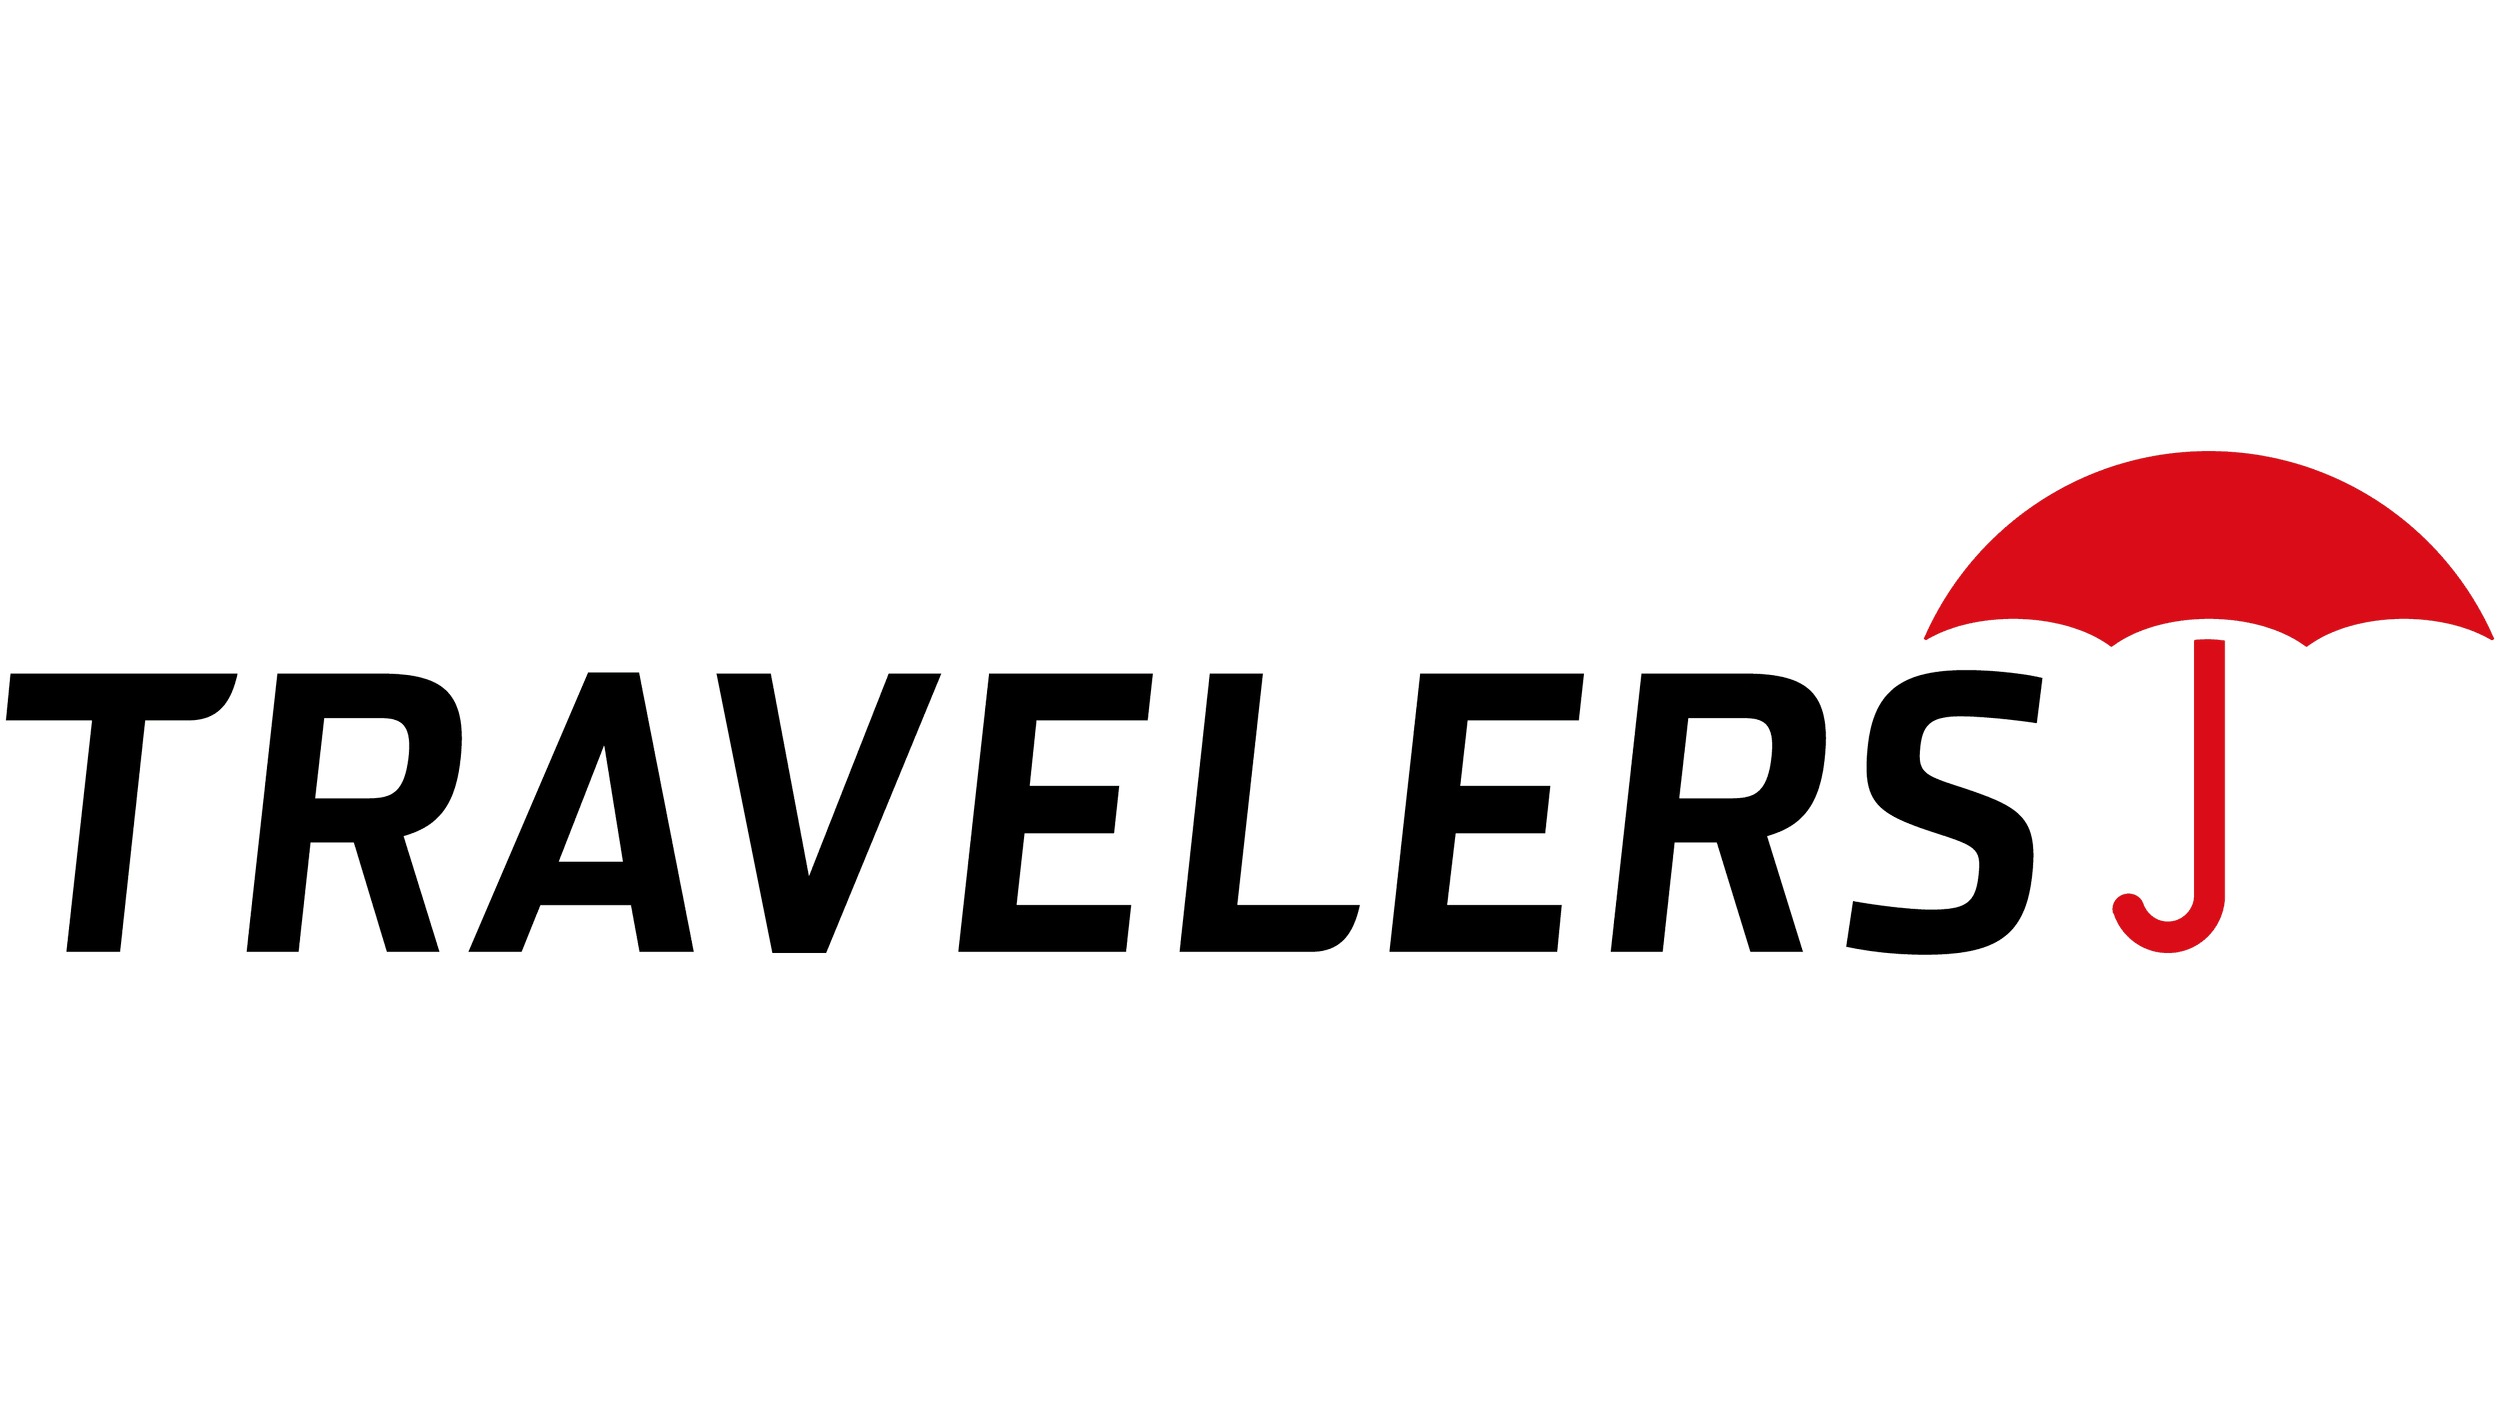 Travelers-logo.png